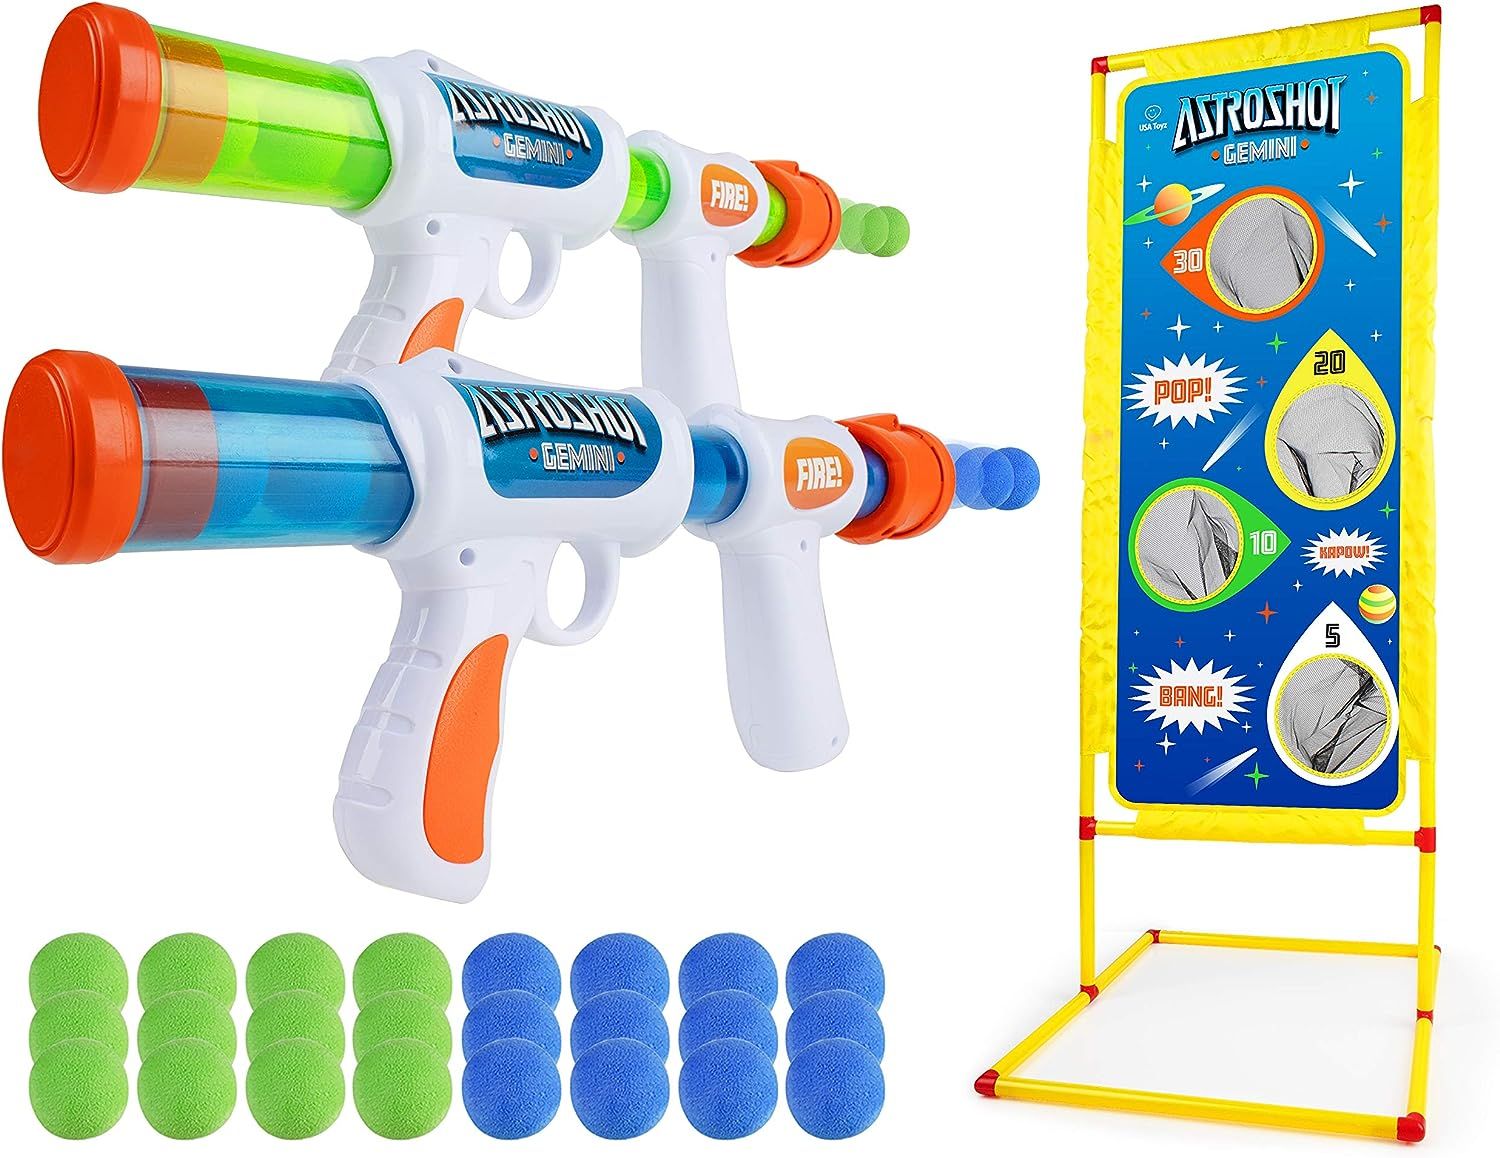 USA Toyz Astroshot Gemini Shooting Games - Foam Ball Popper Guns and Shooting Targets, Toy Guns f... | Amazon (US)